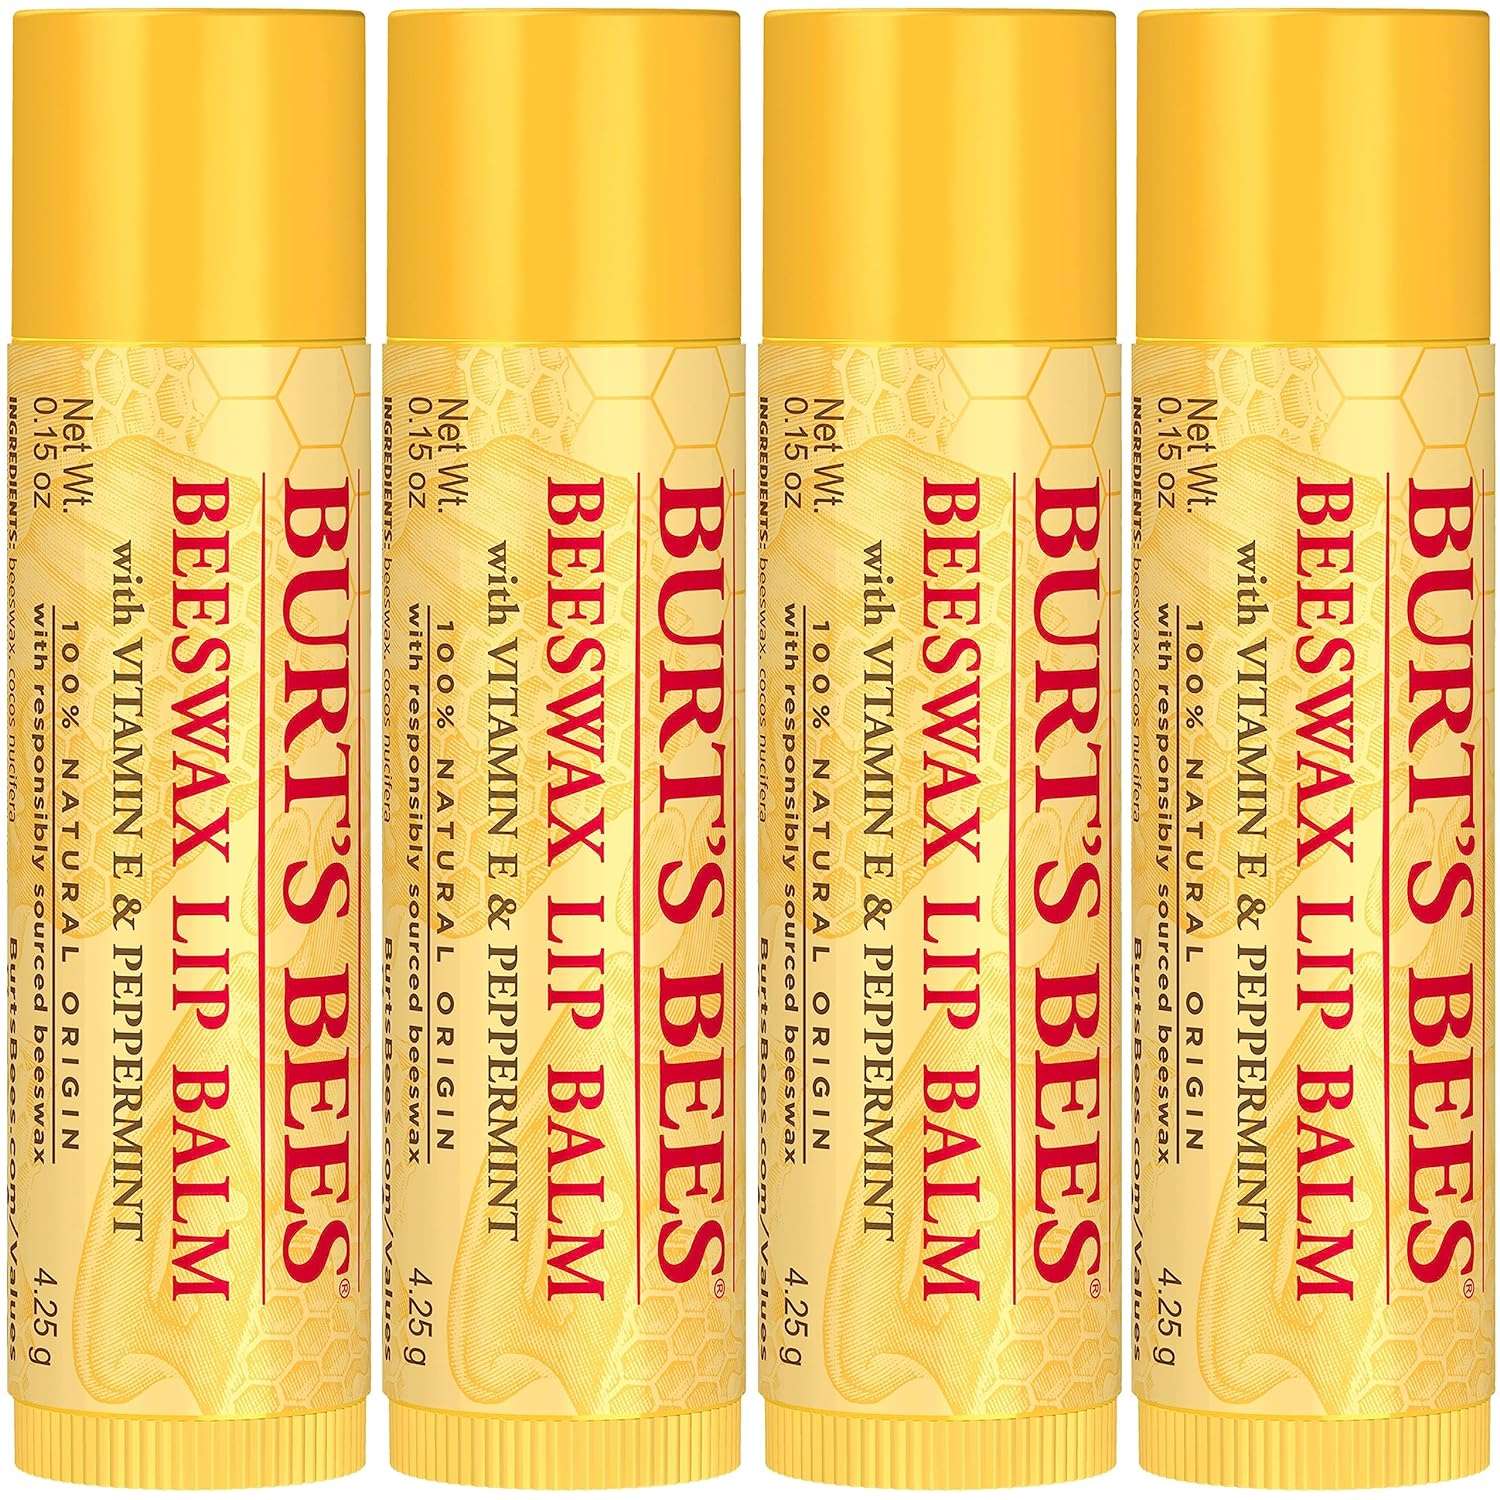 burts bees lip balm stocking stuffers review